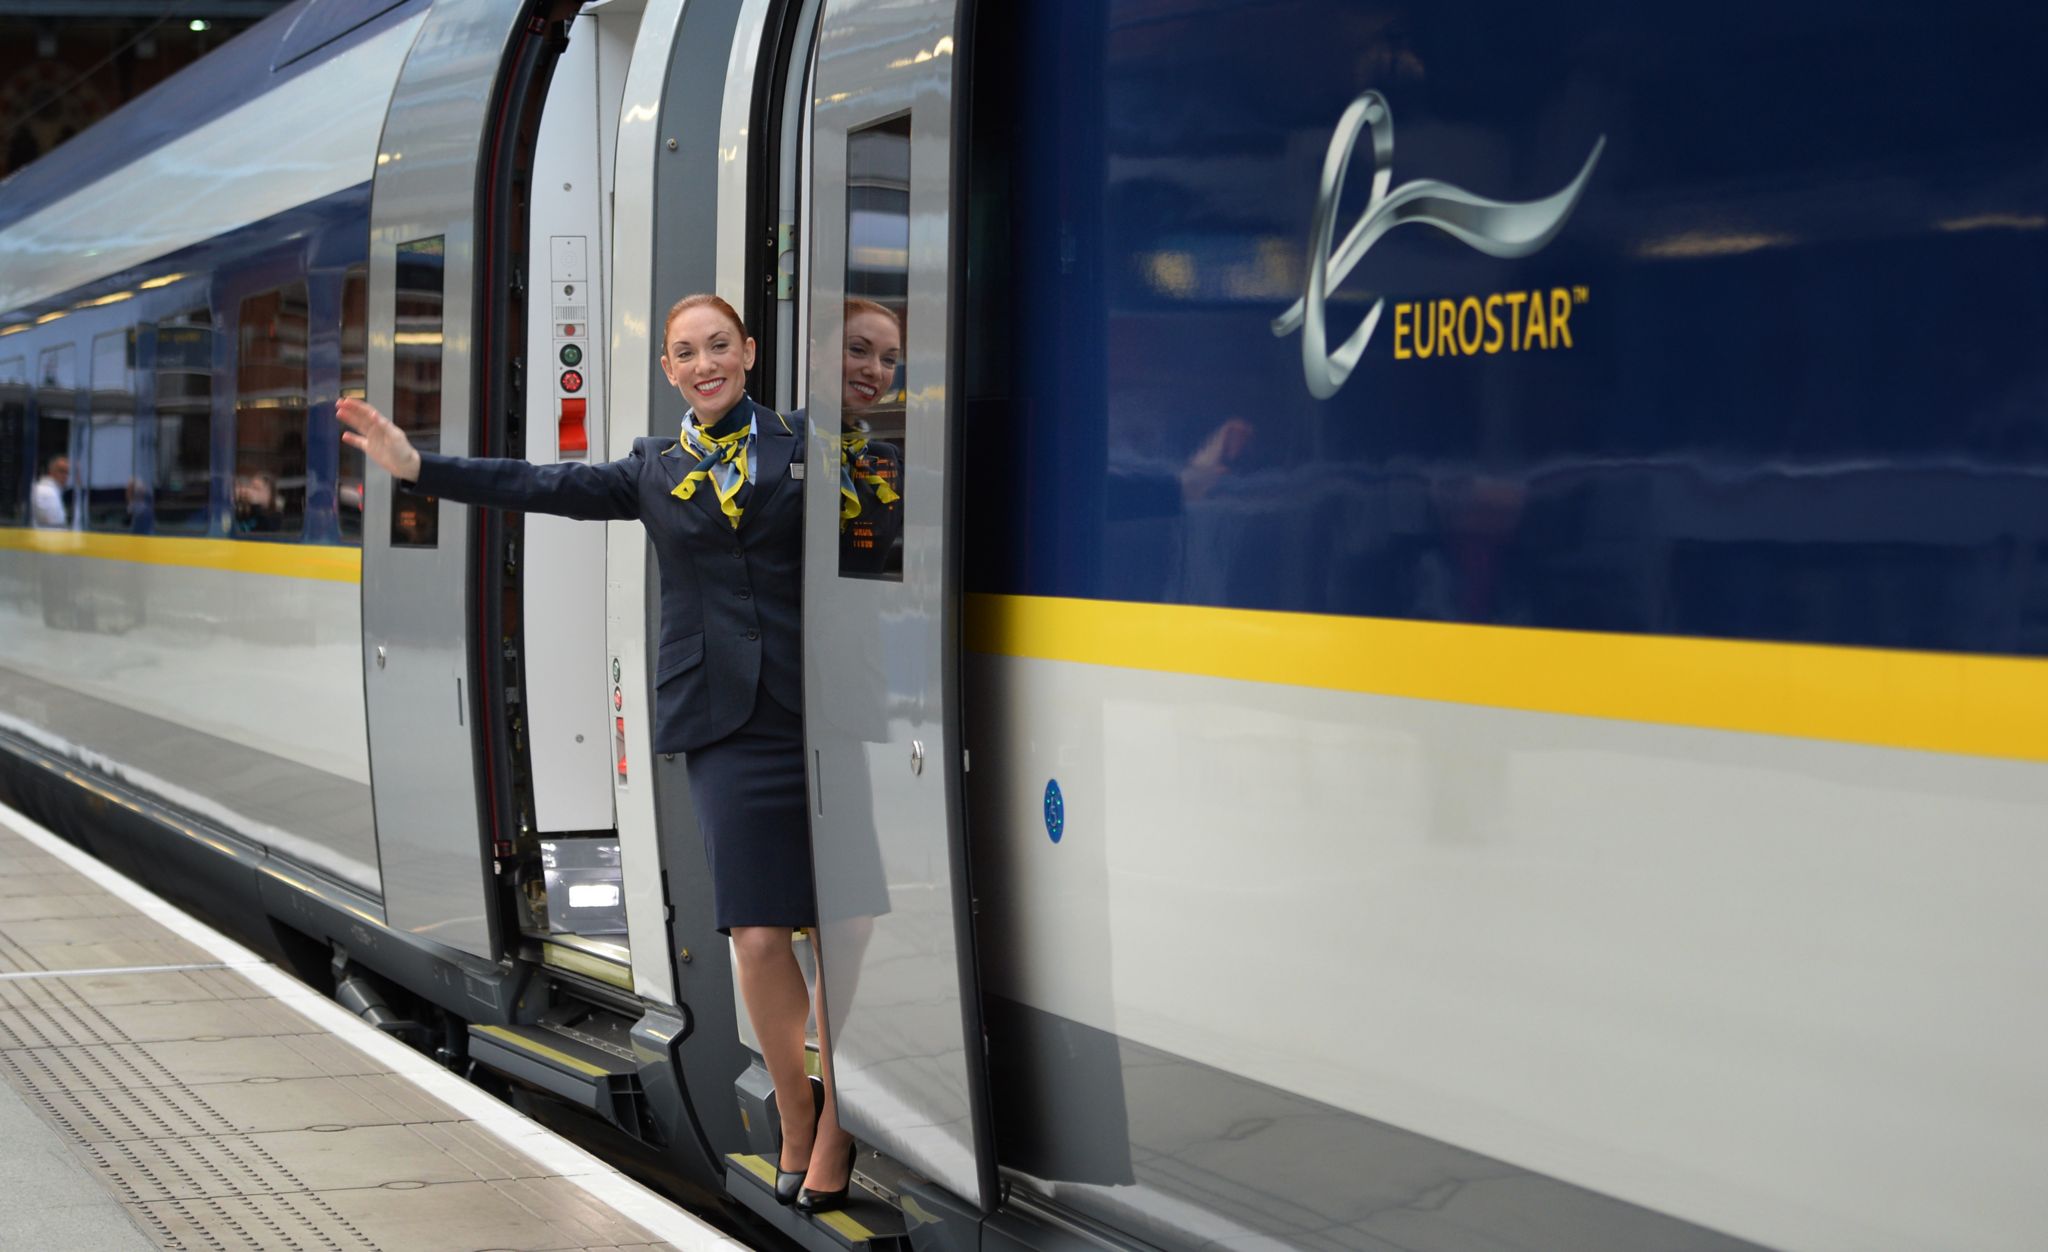 A Eurostar staff member waving from the new e320 train